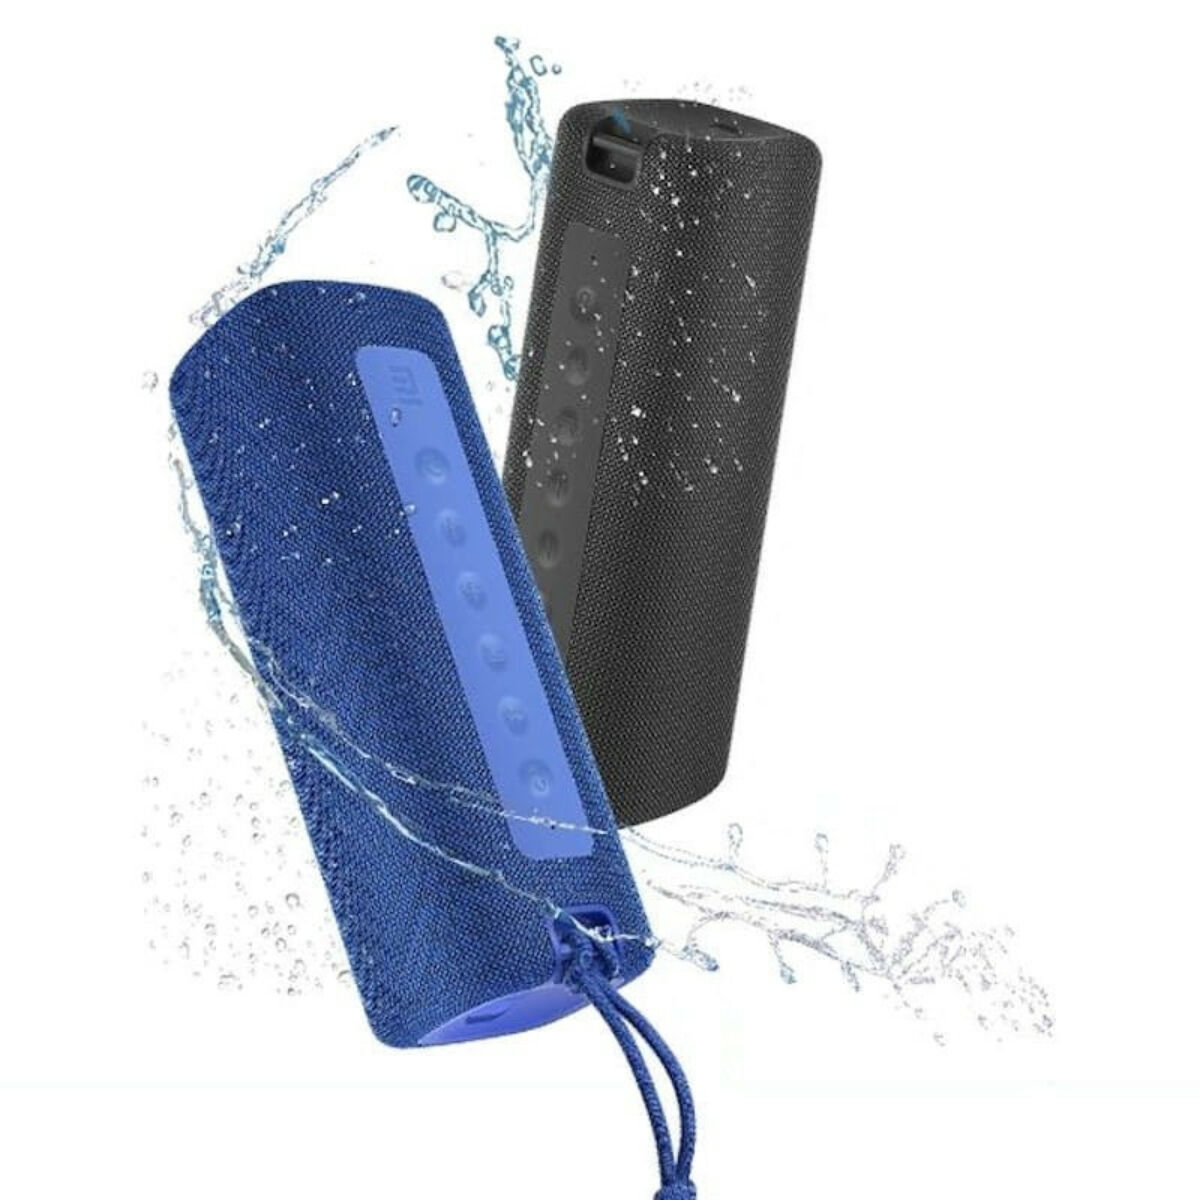 Xiaomi Mi Portable Bluetooth Outdoor Speaker hordozható hangszóró, fekete  EU QBH4195GL